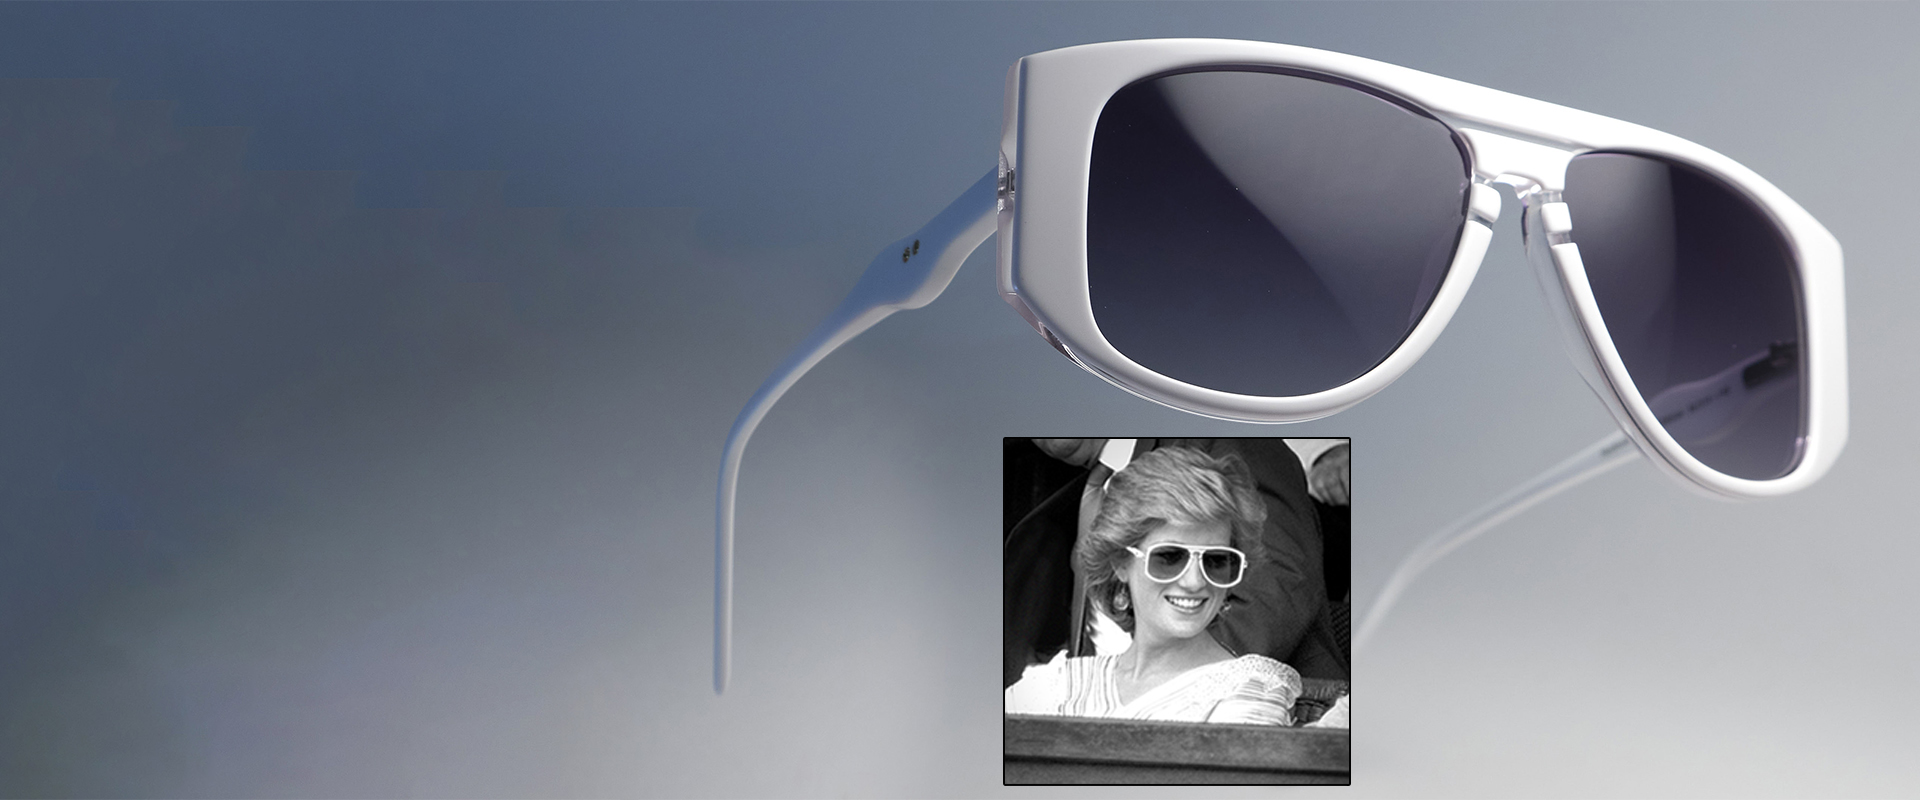 Win a Bespoke pair of Princess Diana inspired sunglasses